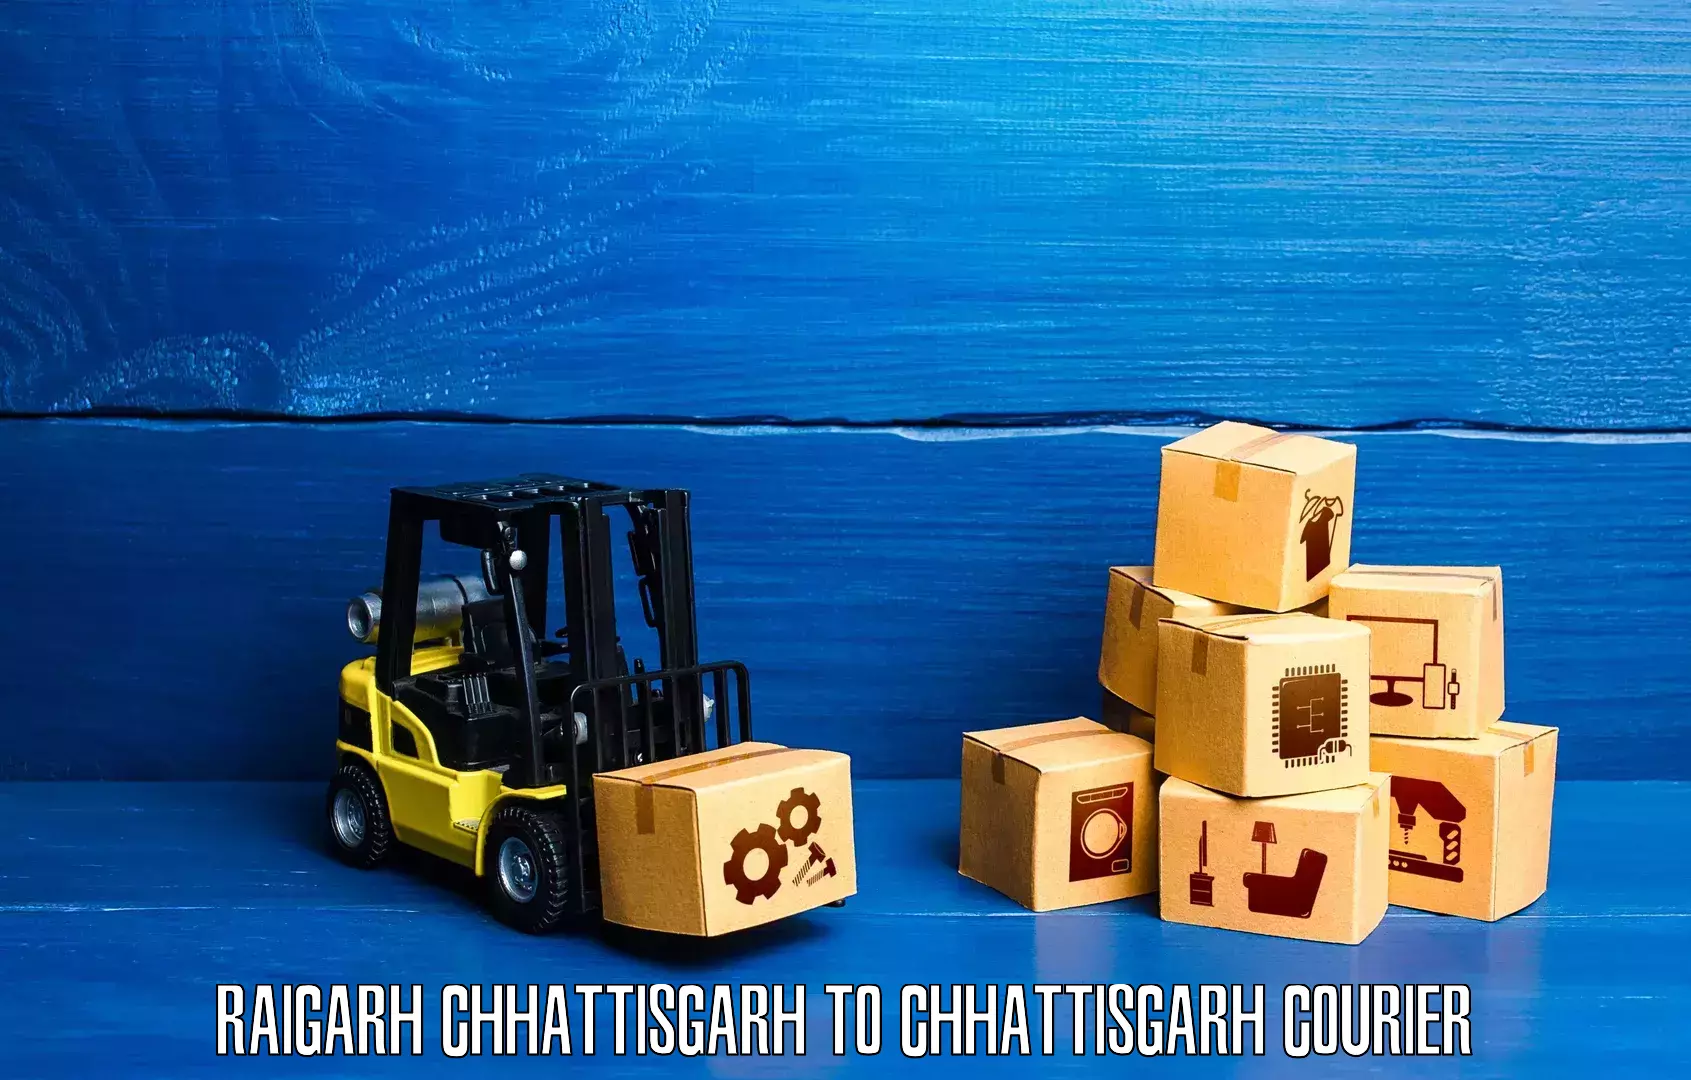 24-hour courier service Raigarh Chhattisgarh to Raigarh Chhattisgarh